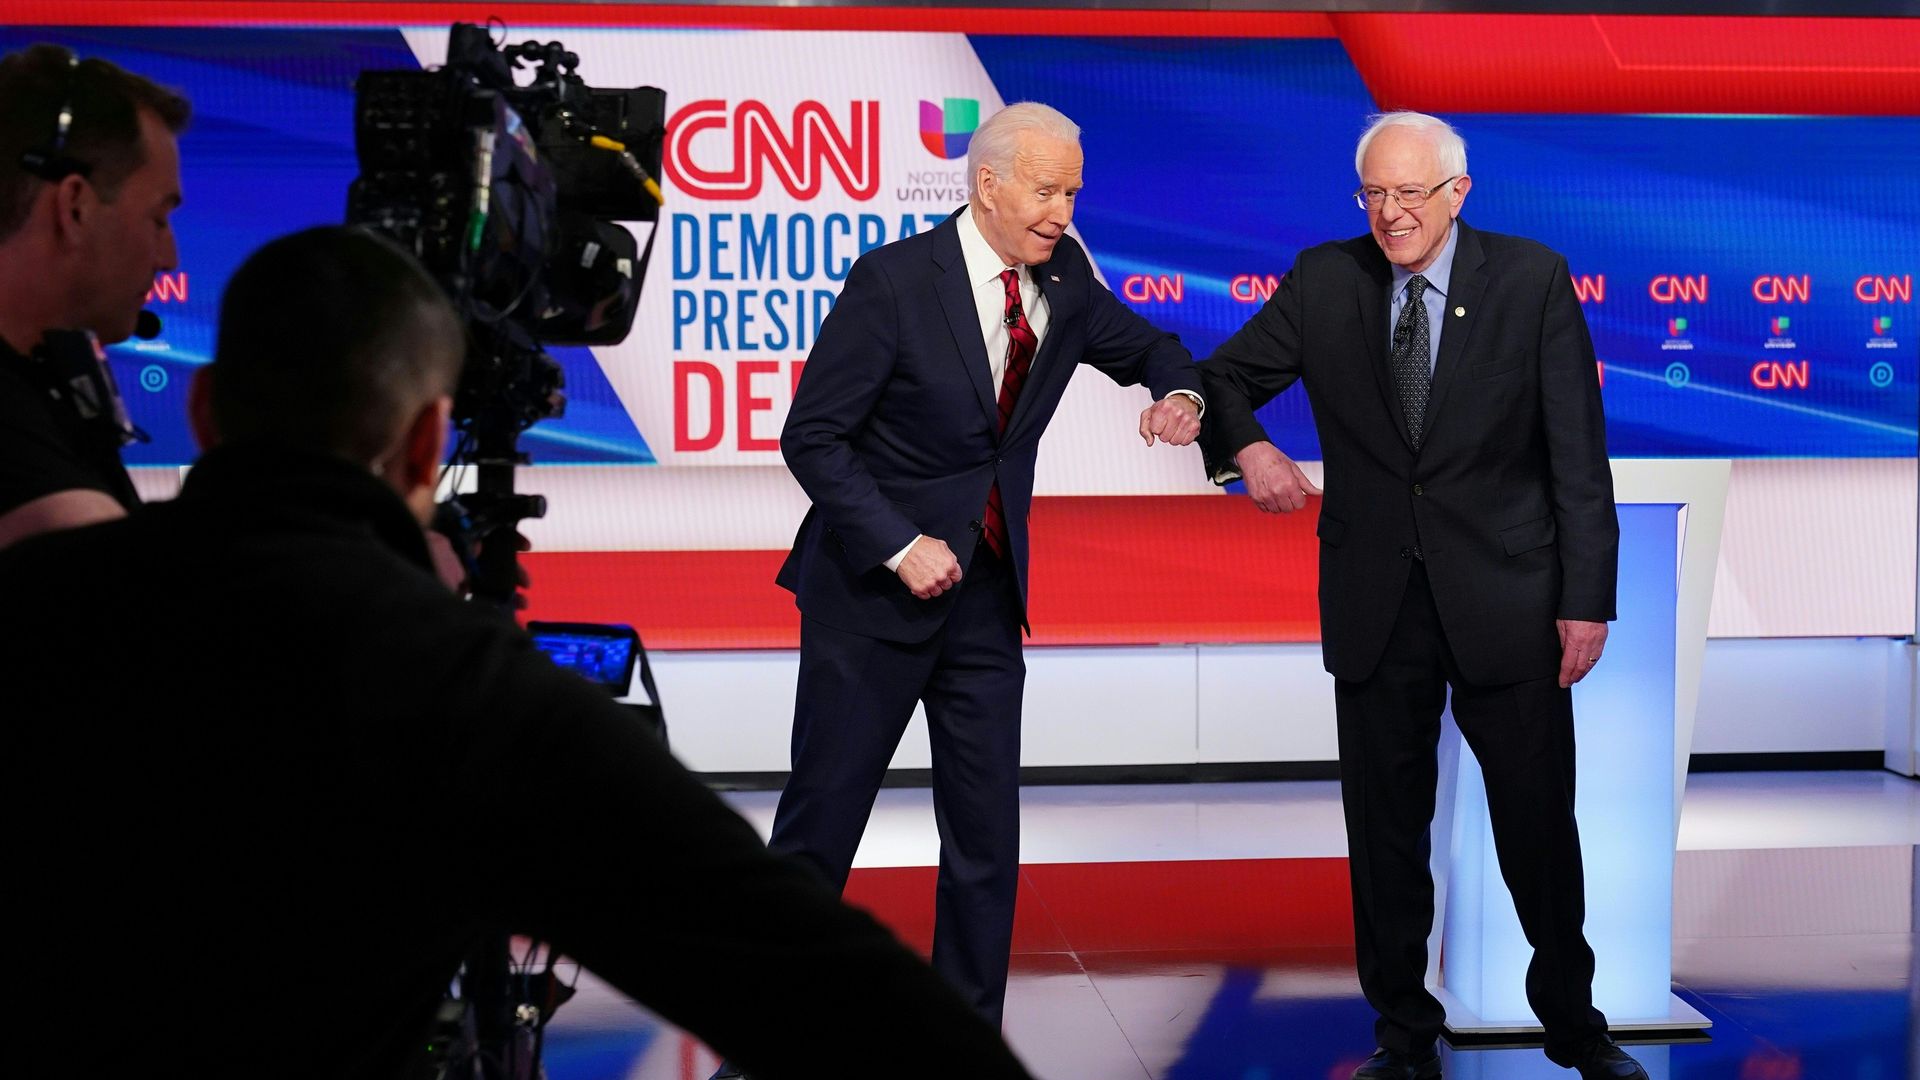 Joe Biden and Bernie Sanders bumping elbows